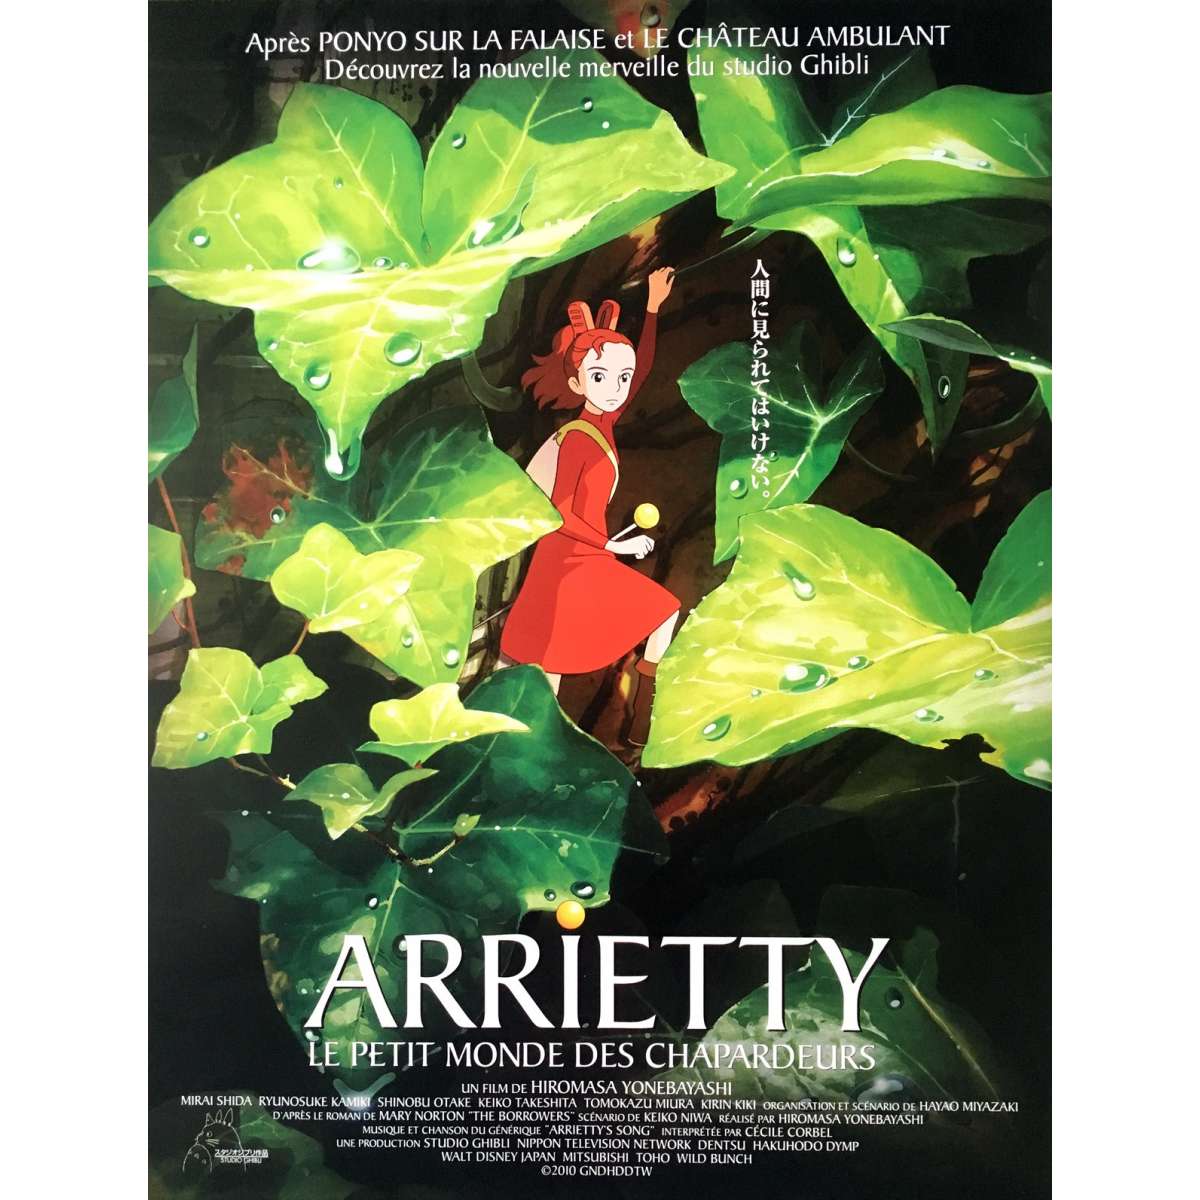 the secret world of arrietty full movie free streaming